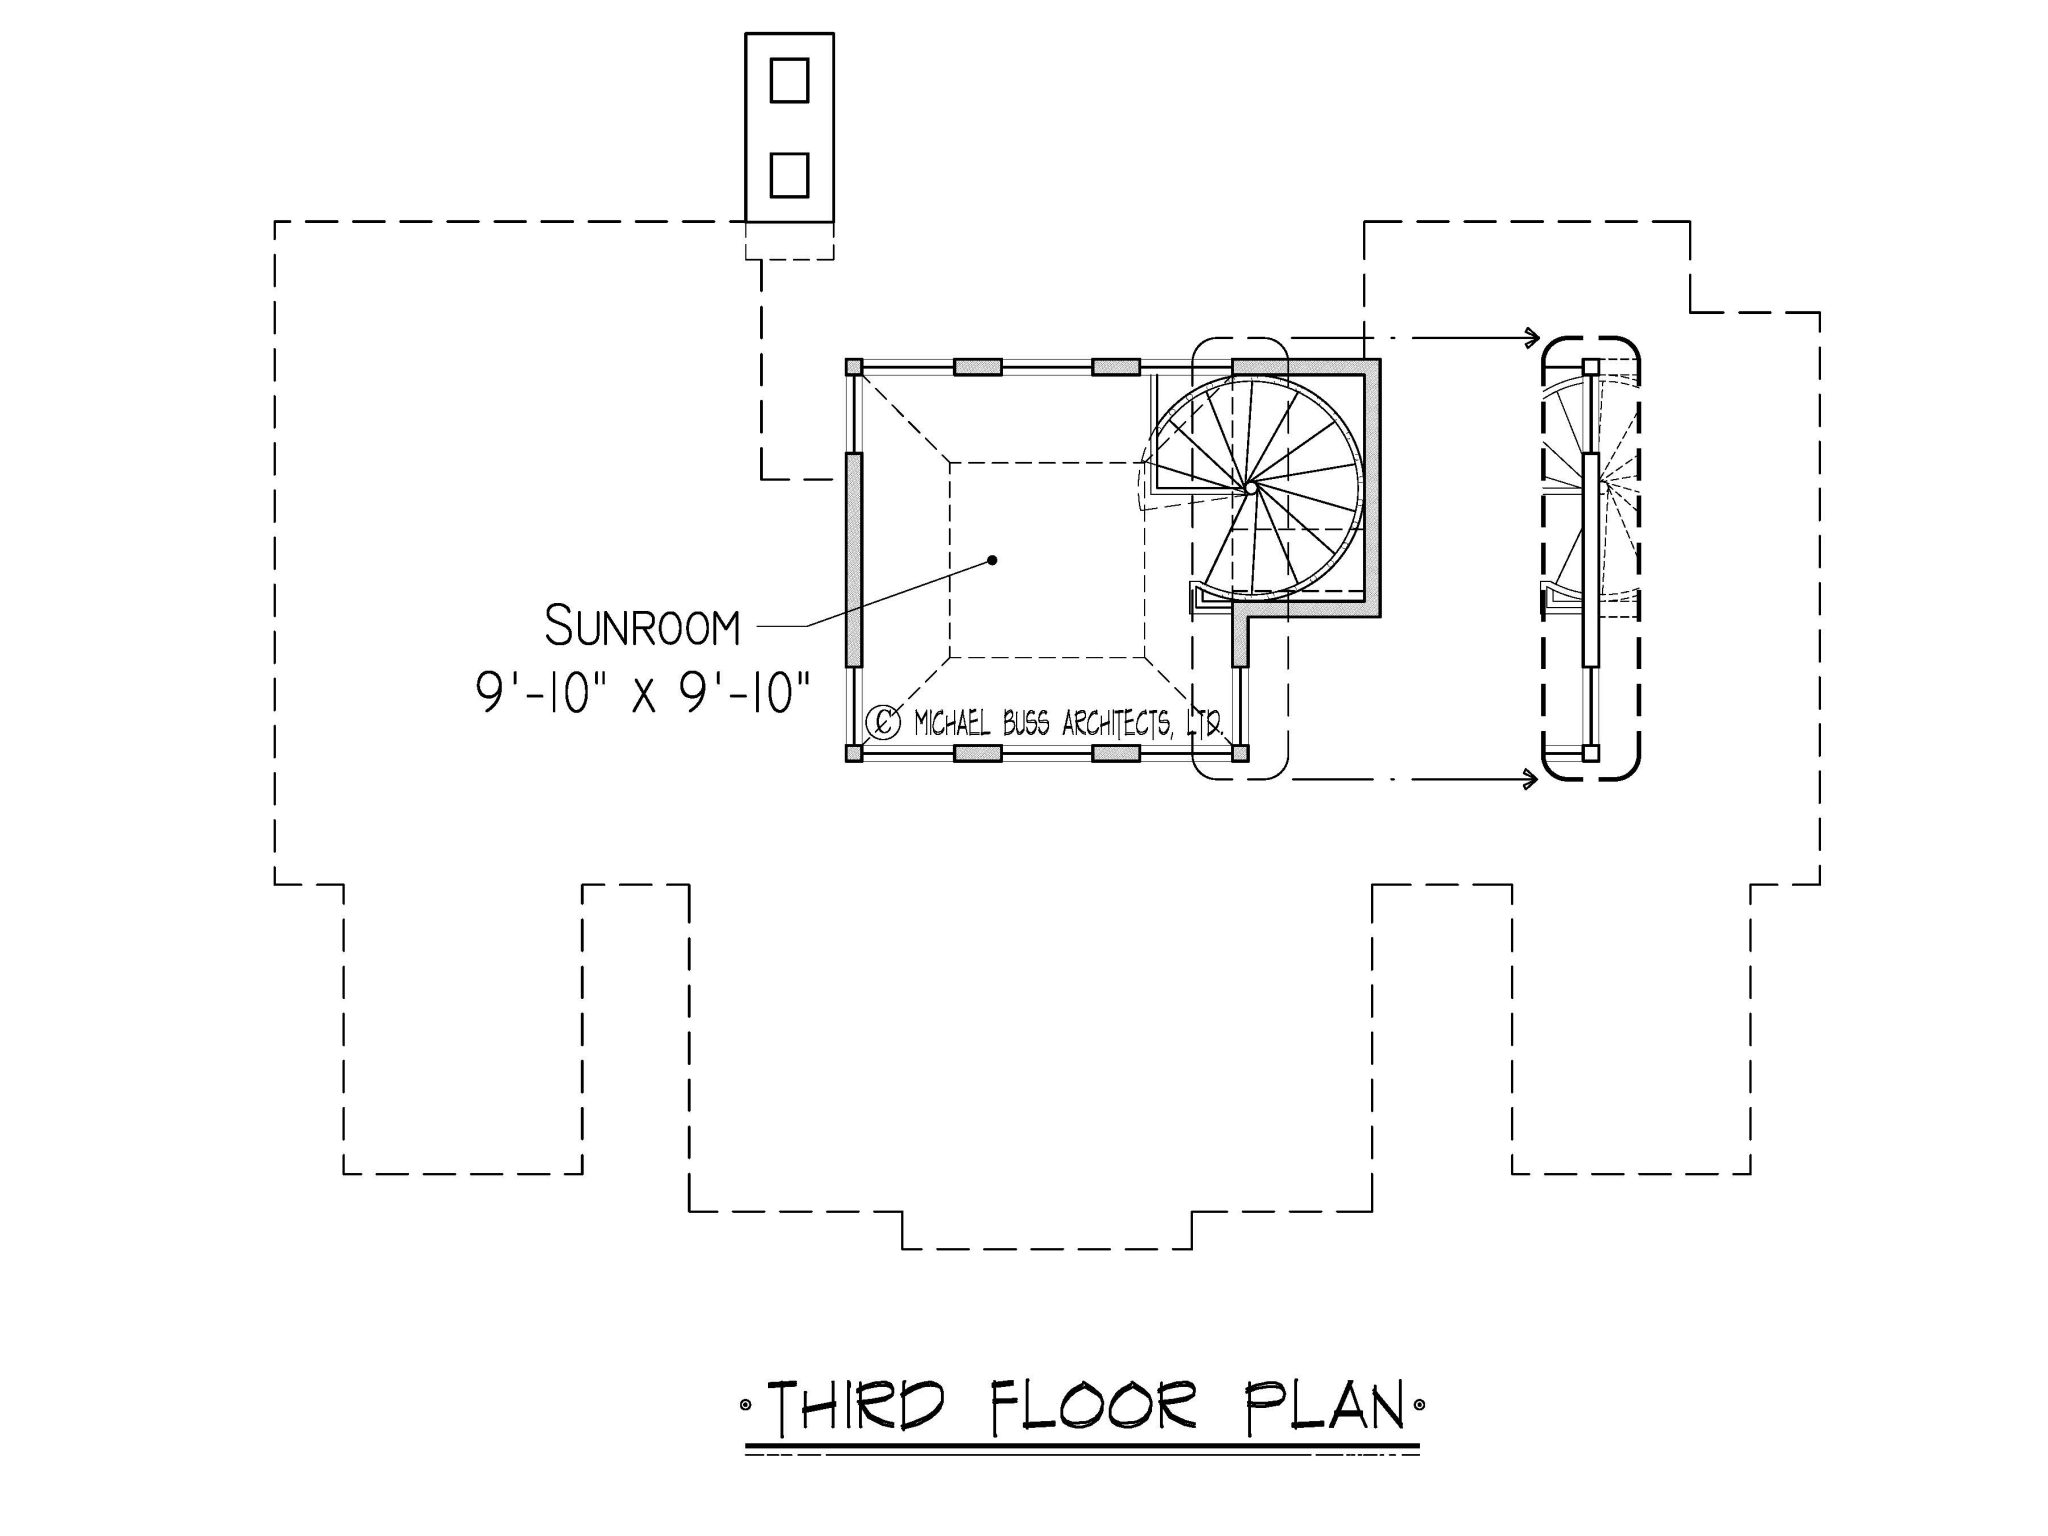 Michael-Buss-Architects-04090-Plan